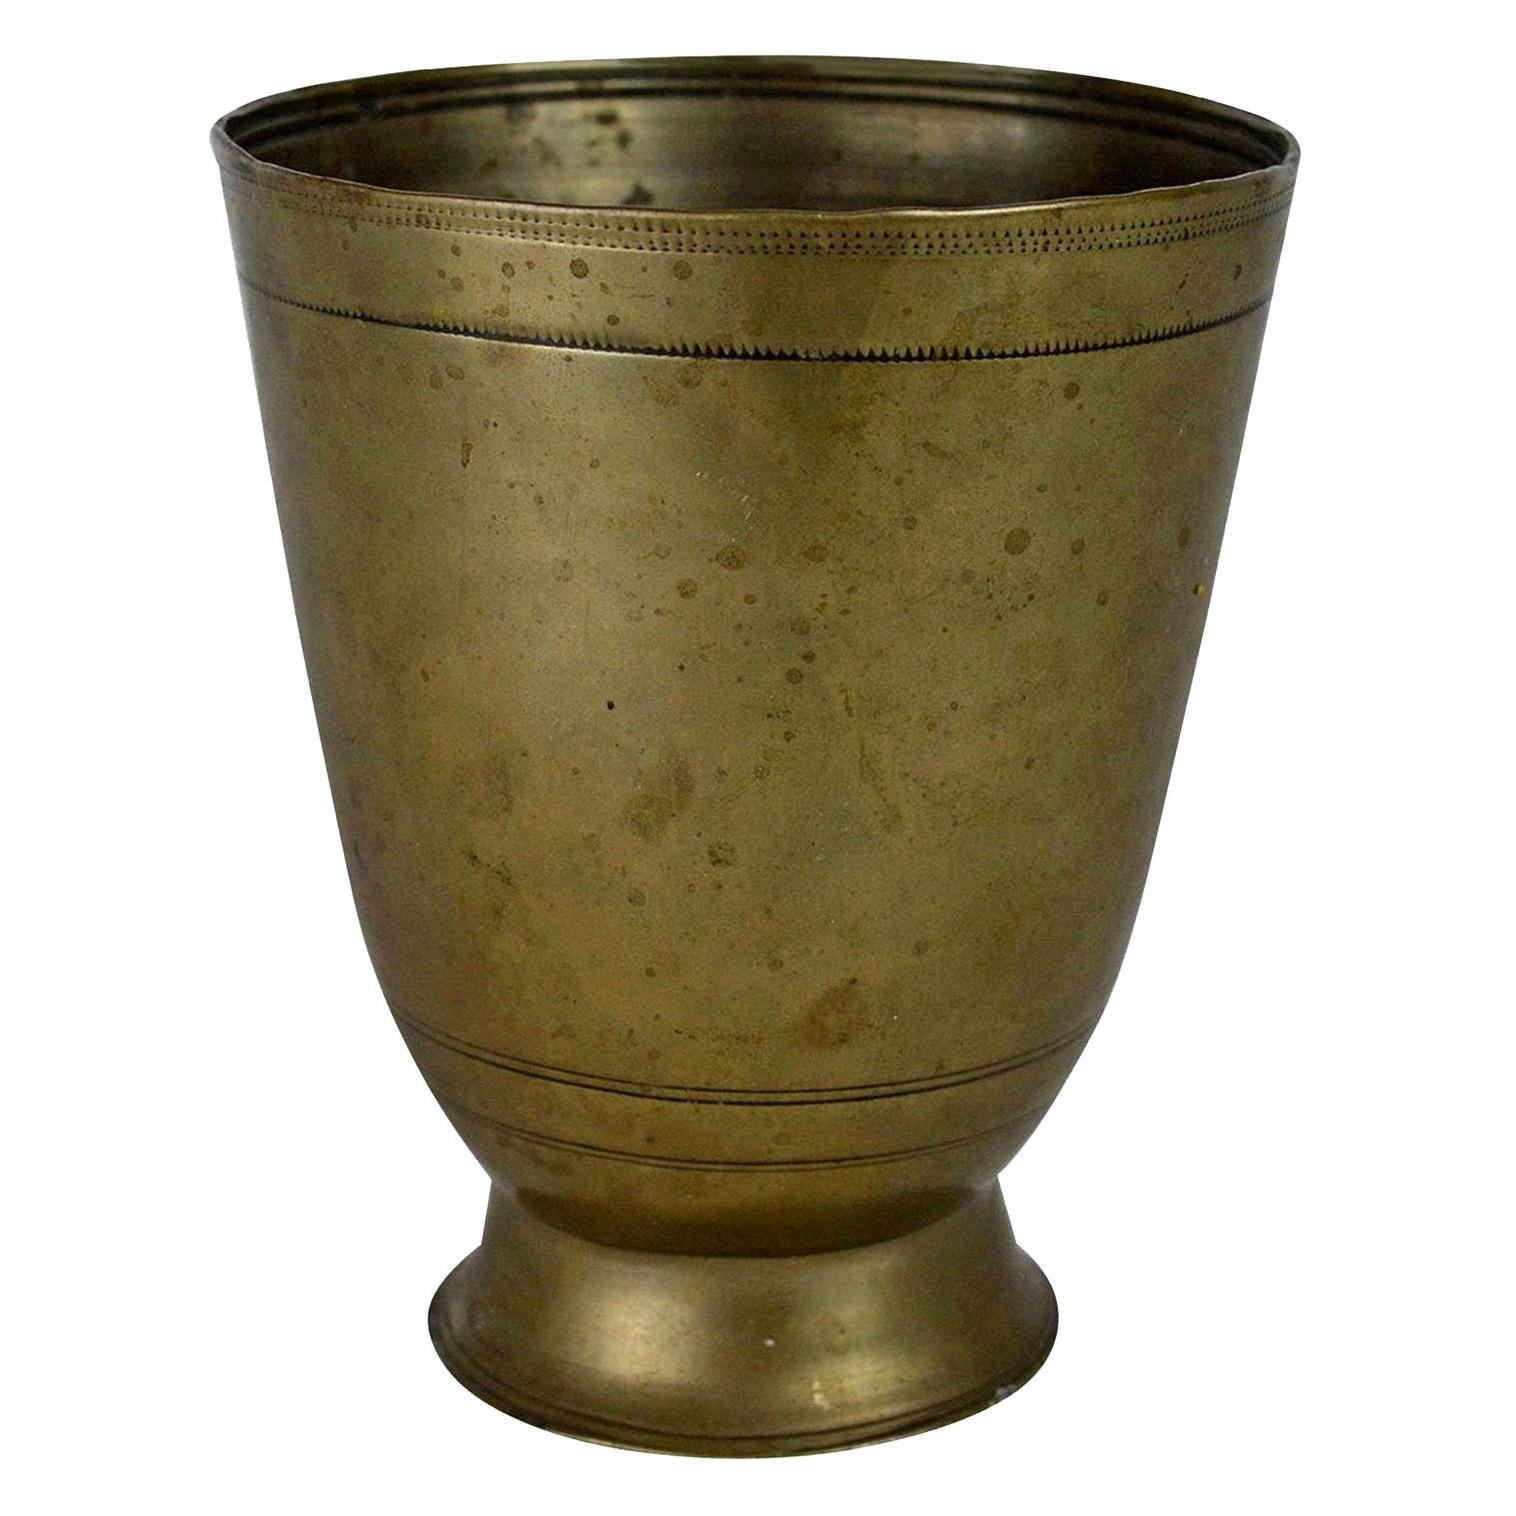 Antique German Paktong Tumbler Cup, 17th Century